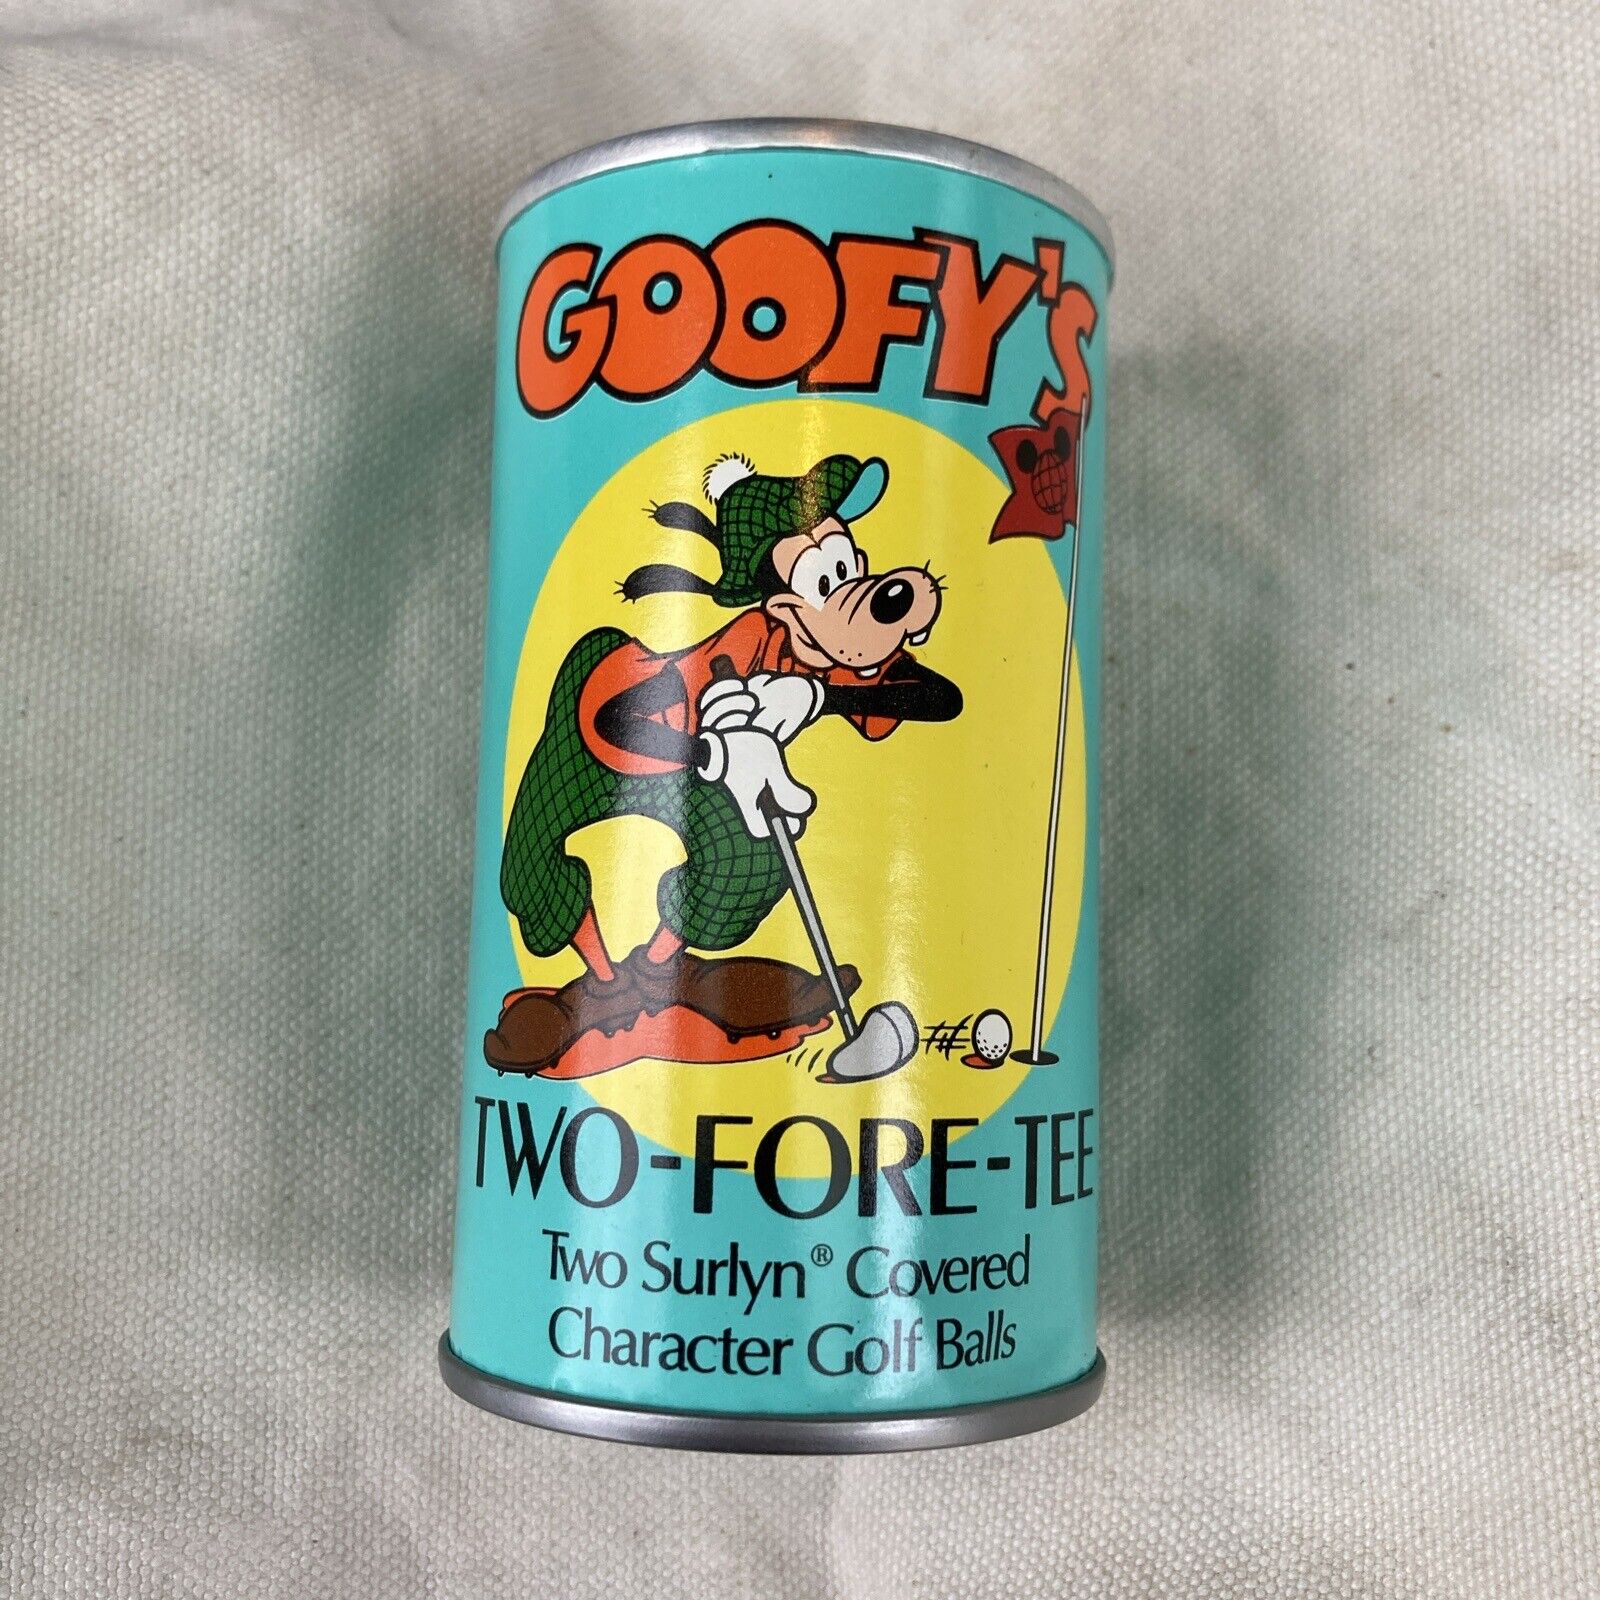 Walt Disney World Goofy Two-Fore-Tee Titleist Golf Balls Sealed Mickey Mouse